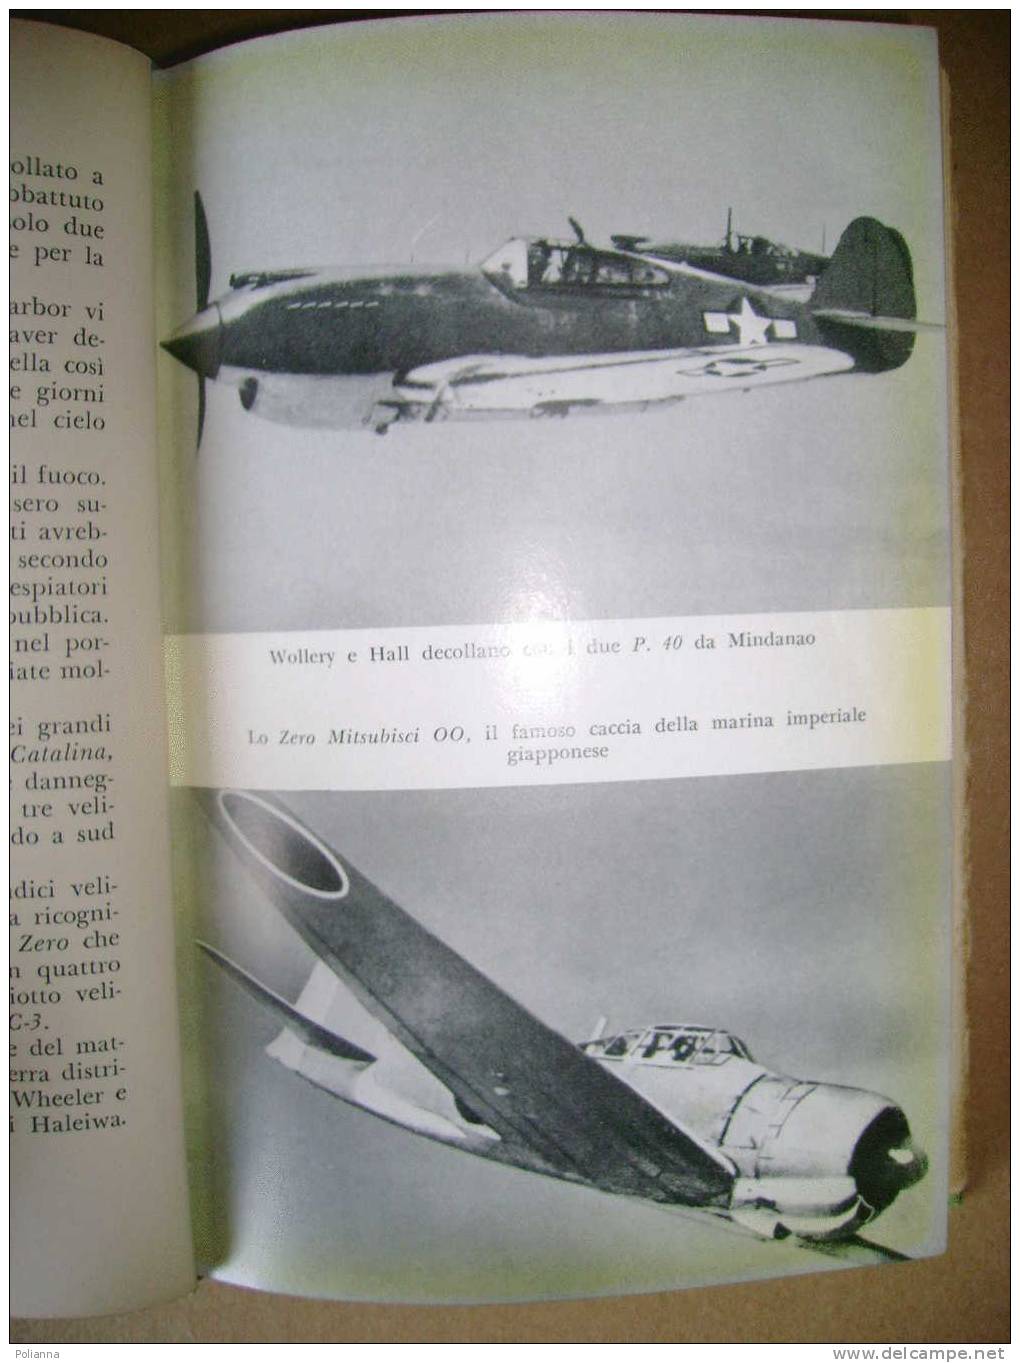 PAC/17 Closterman LA GUERRA NELL´ARIA Longanesi 1963/aviazione/aerei Militari - Aviazione